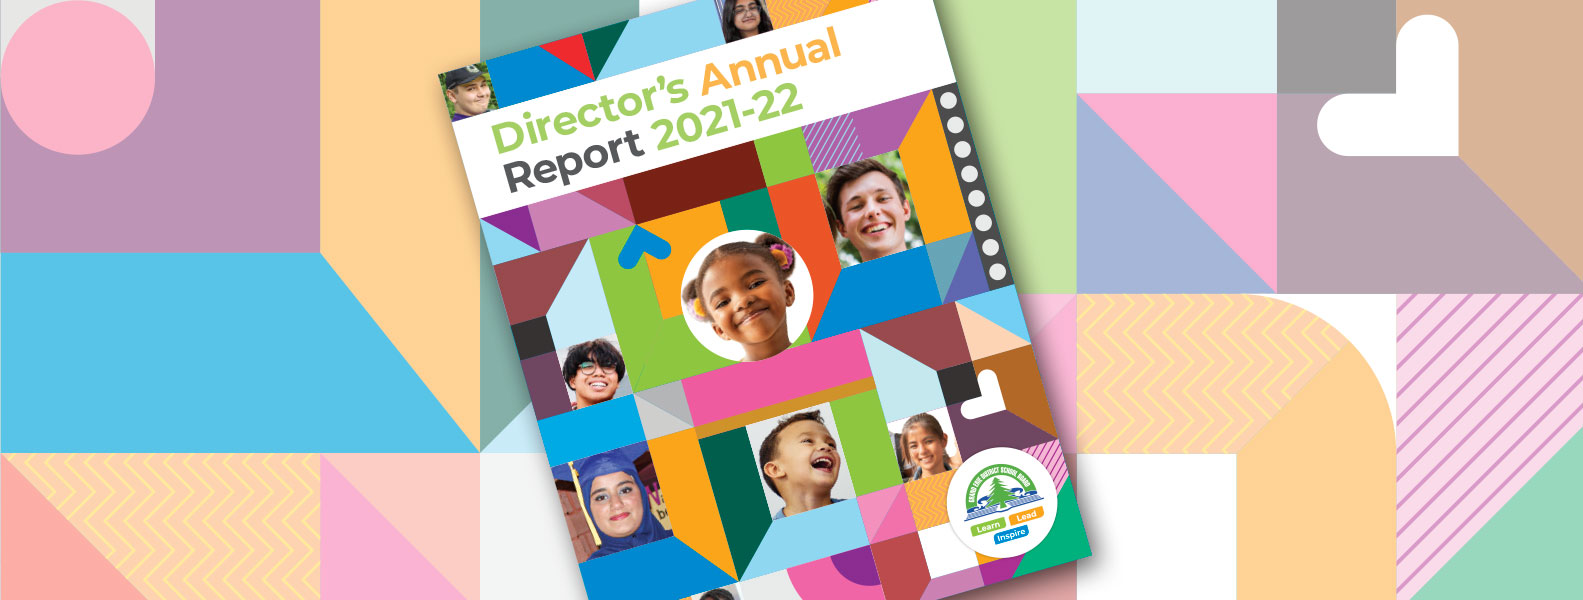 Director's Annual Report 2021-22